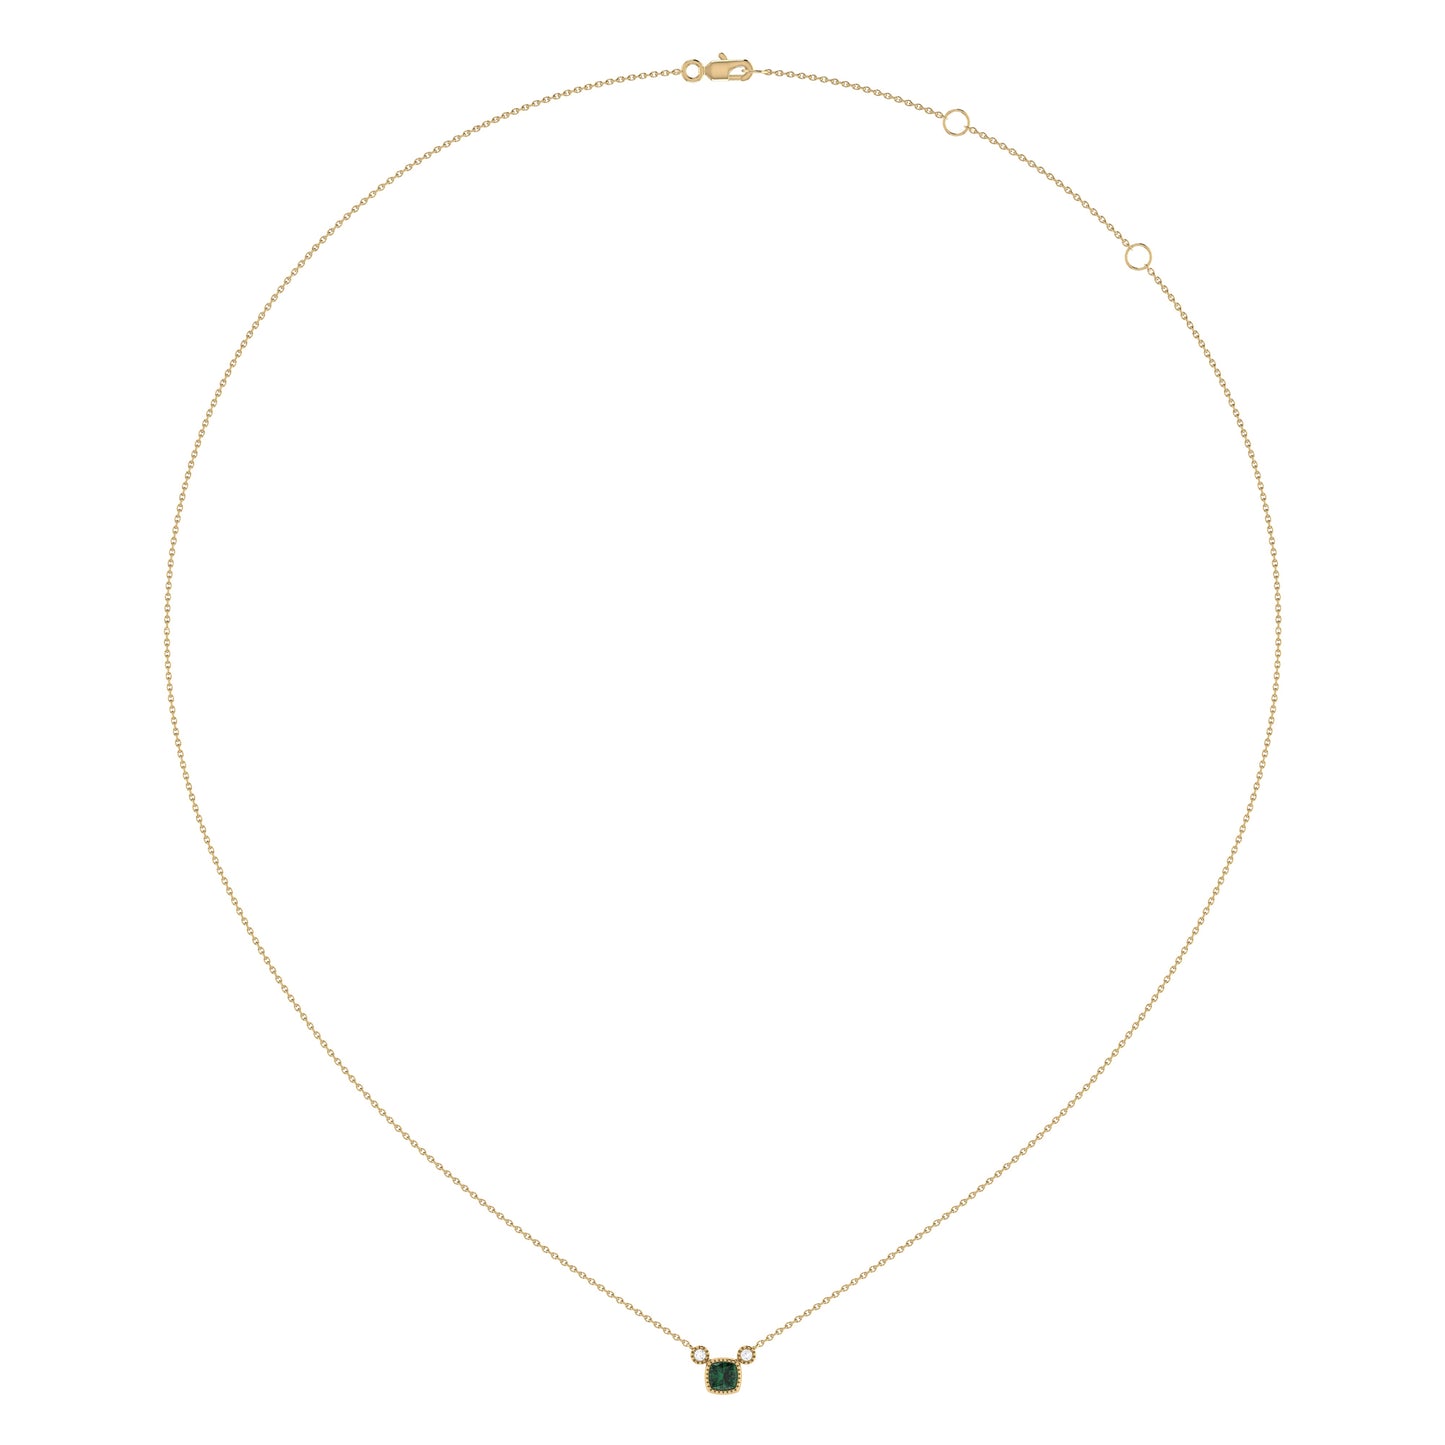 Cushion Cut Emerald & Diamond Birthstone Necklace In 14K Yellow Gold by LuvMyJewelry